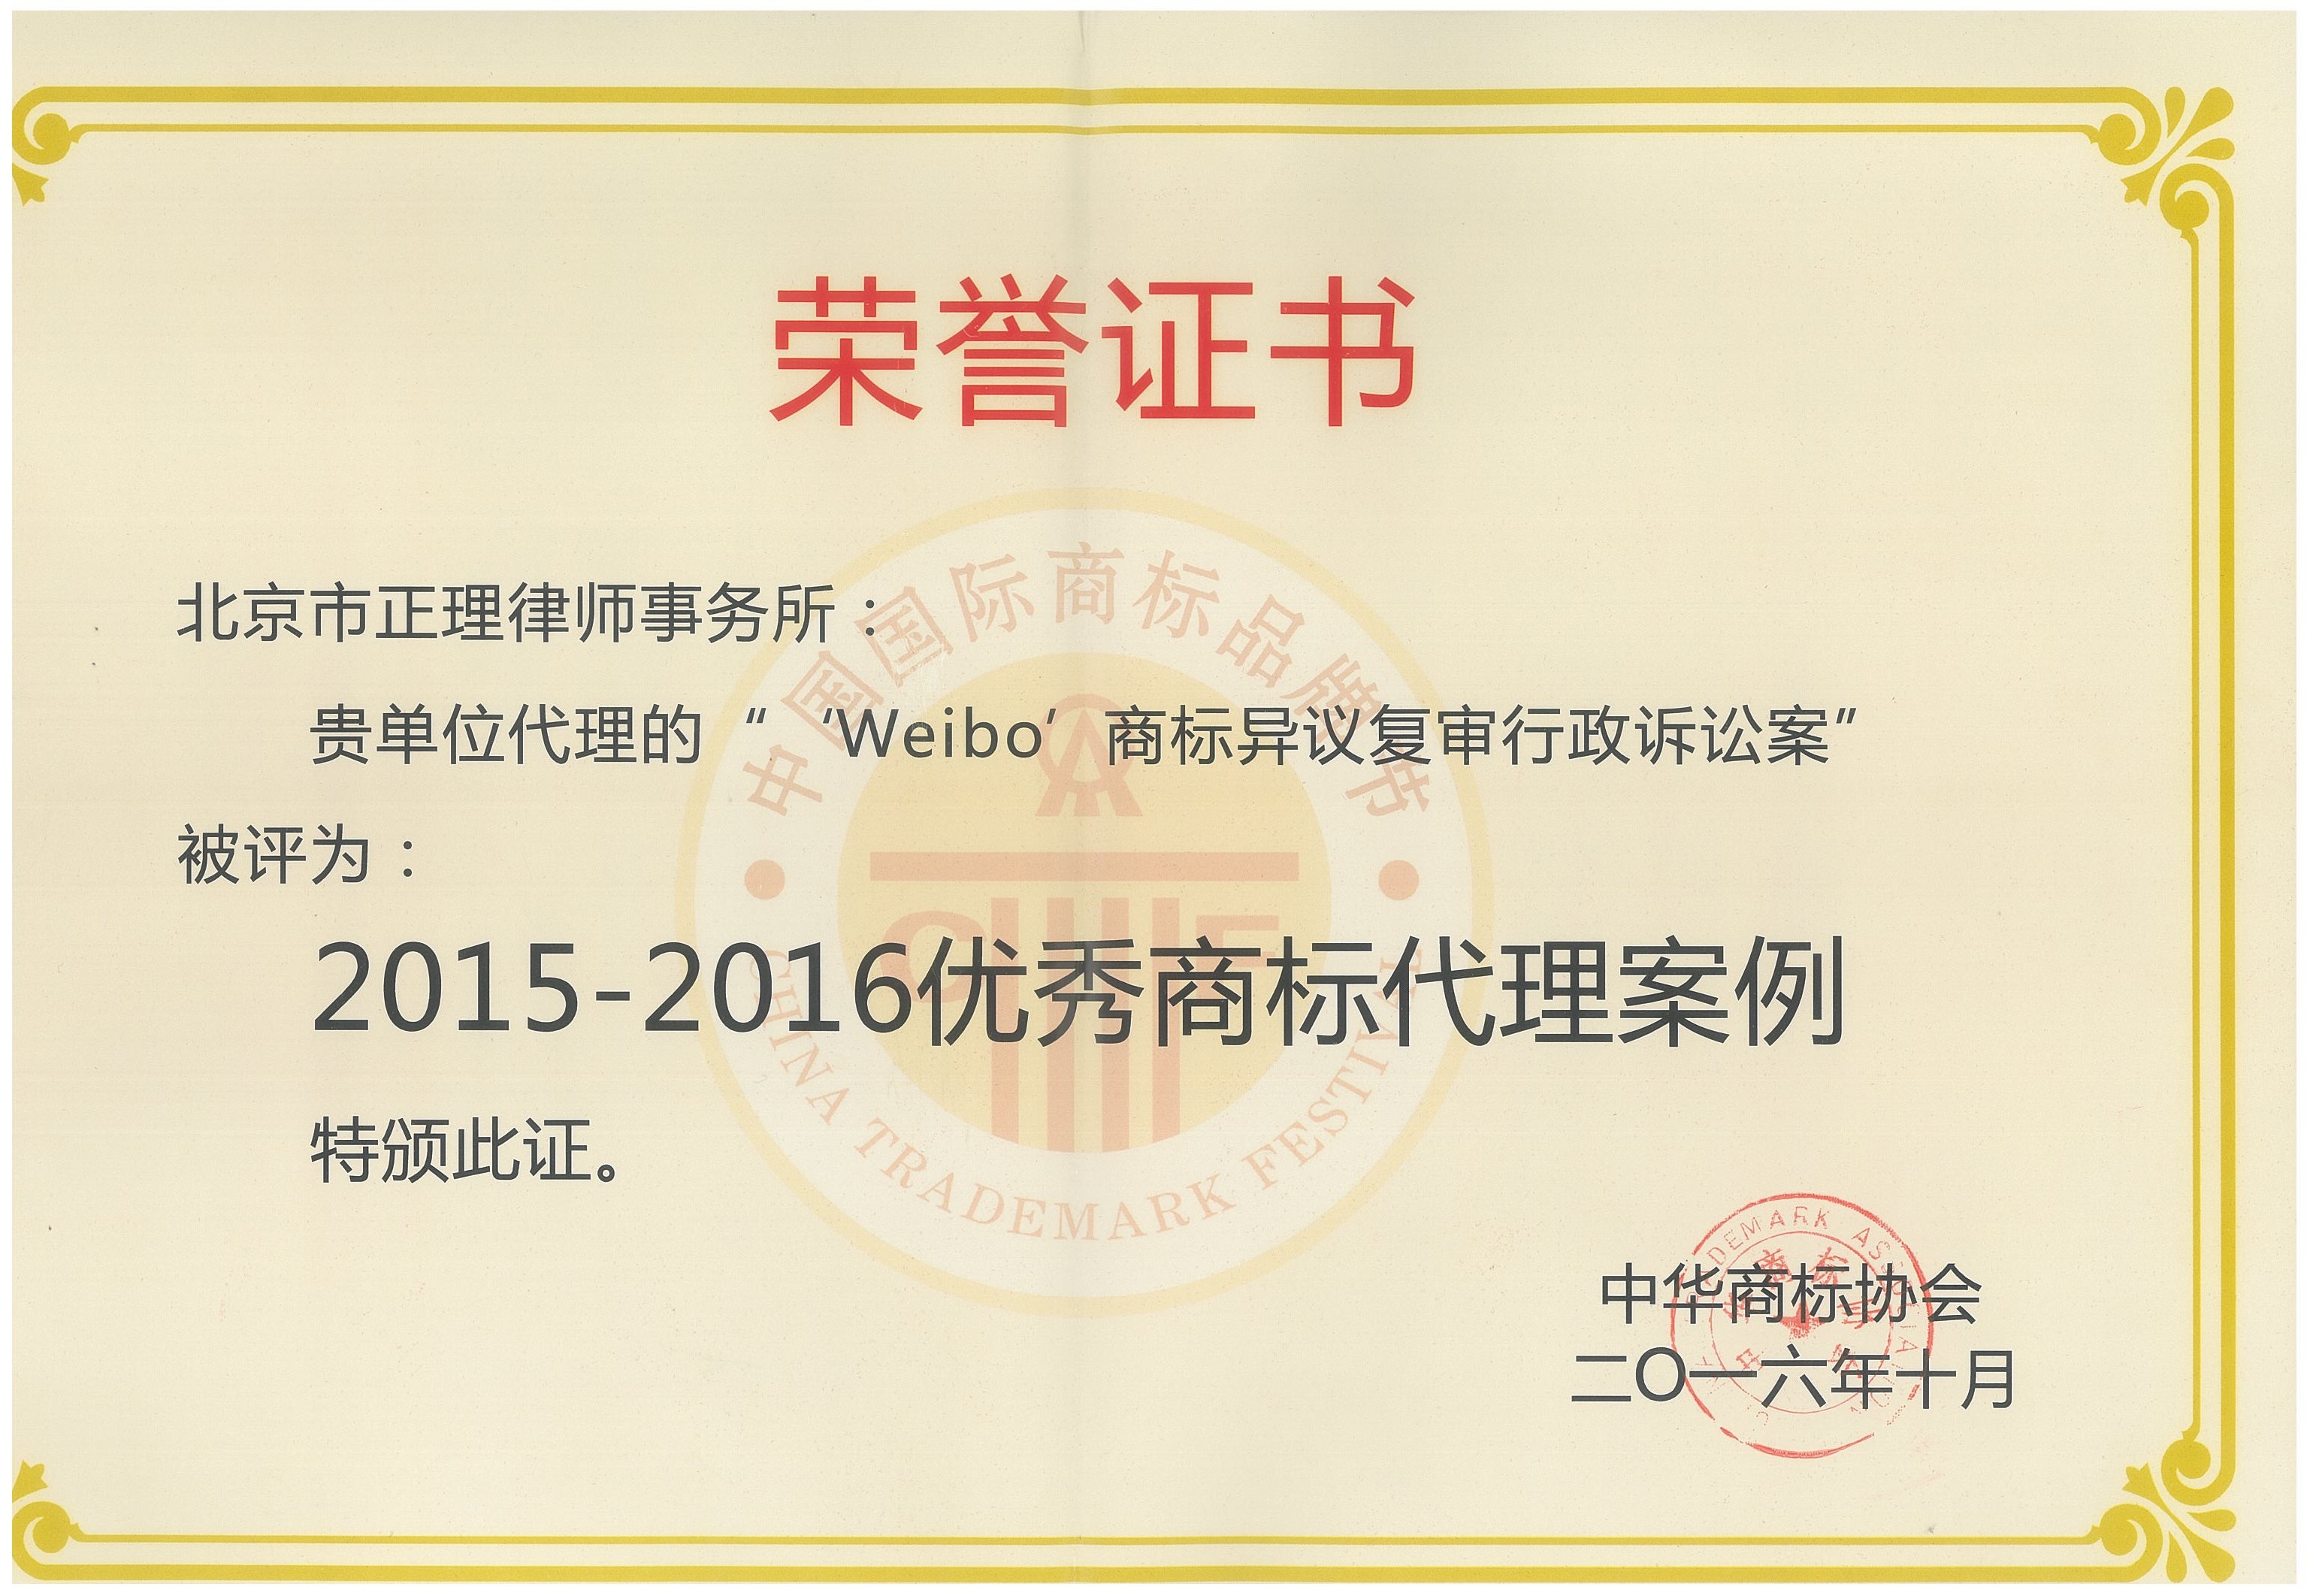 2015-2016年 weibo 优秀商标代理案例